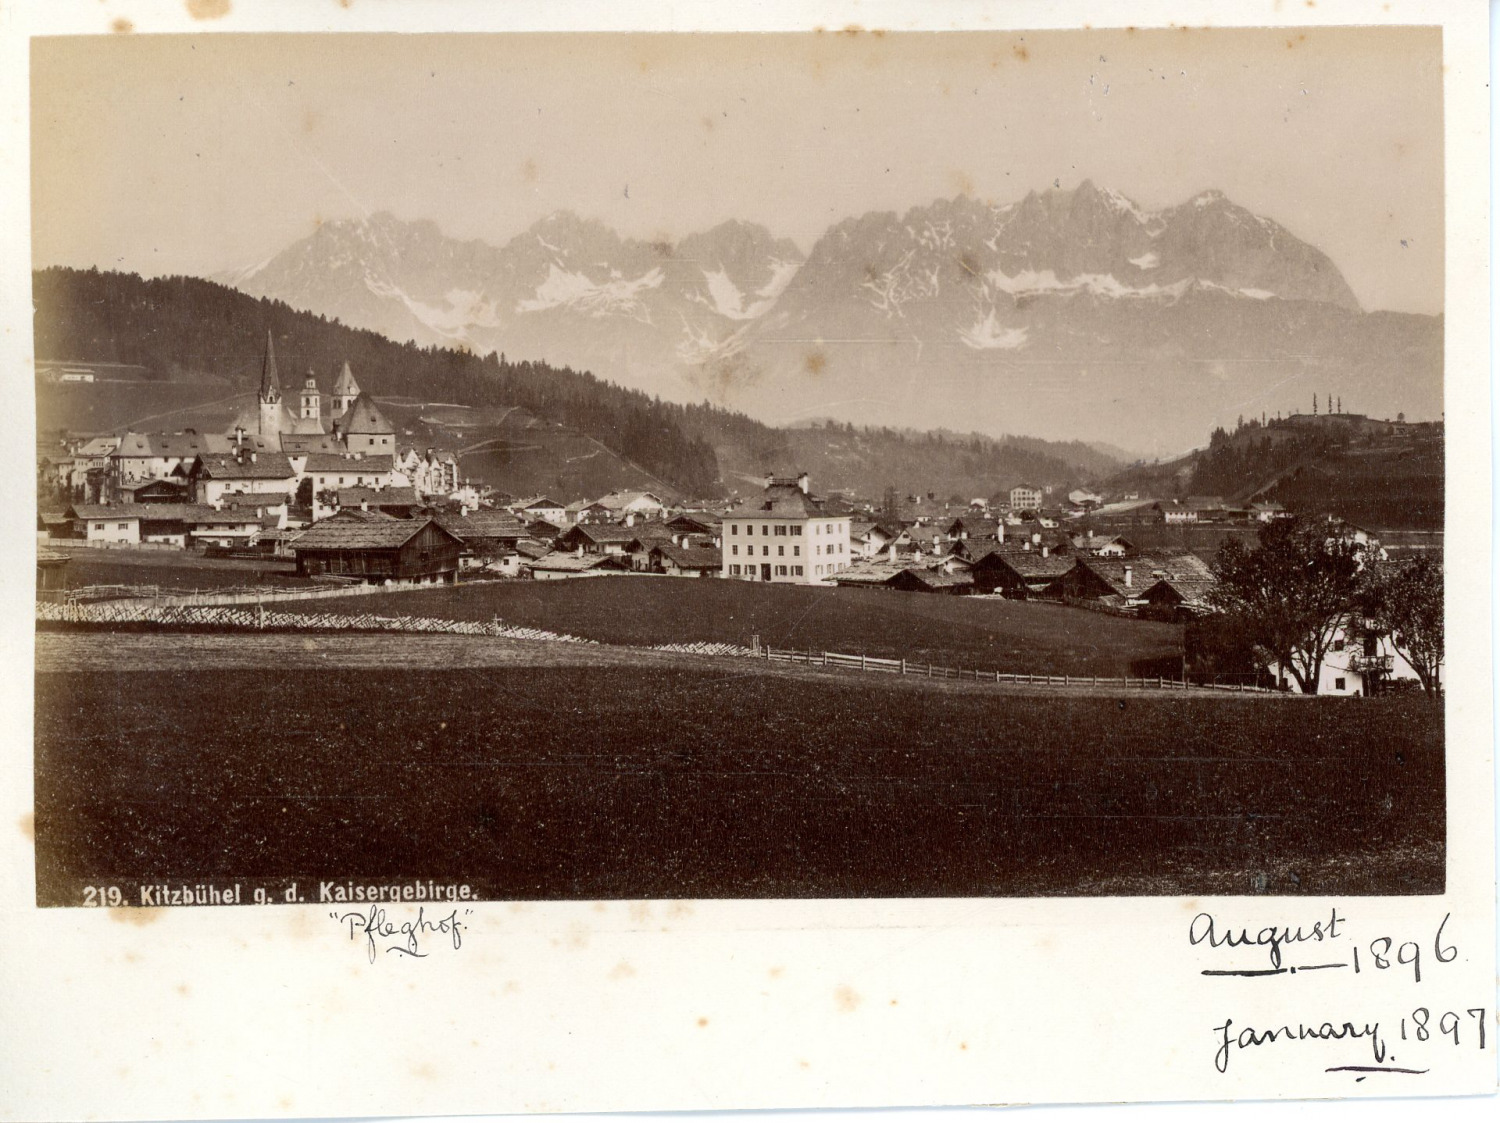 Austria, Kitzbühel g.d. Kaisergebirge, 1896,1897 vintage albumen print, tire